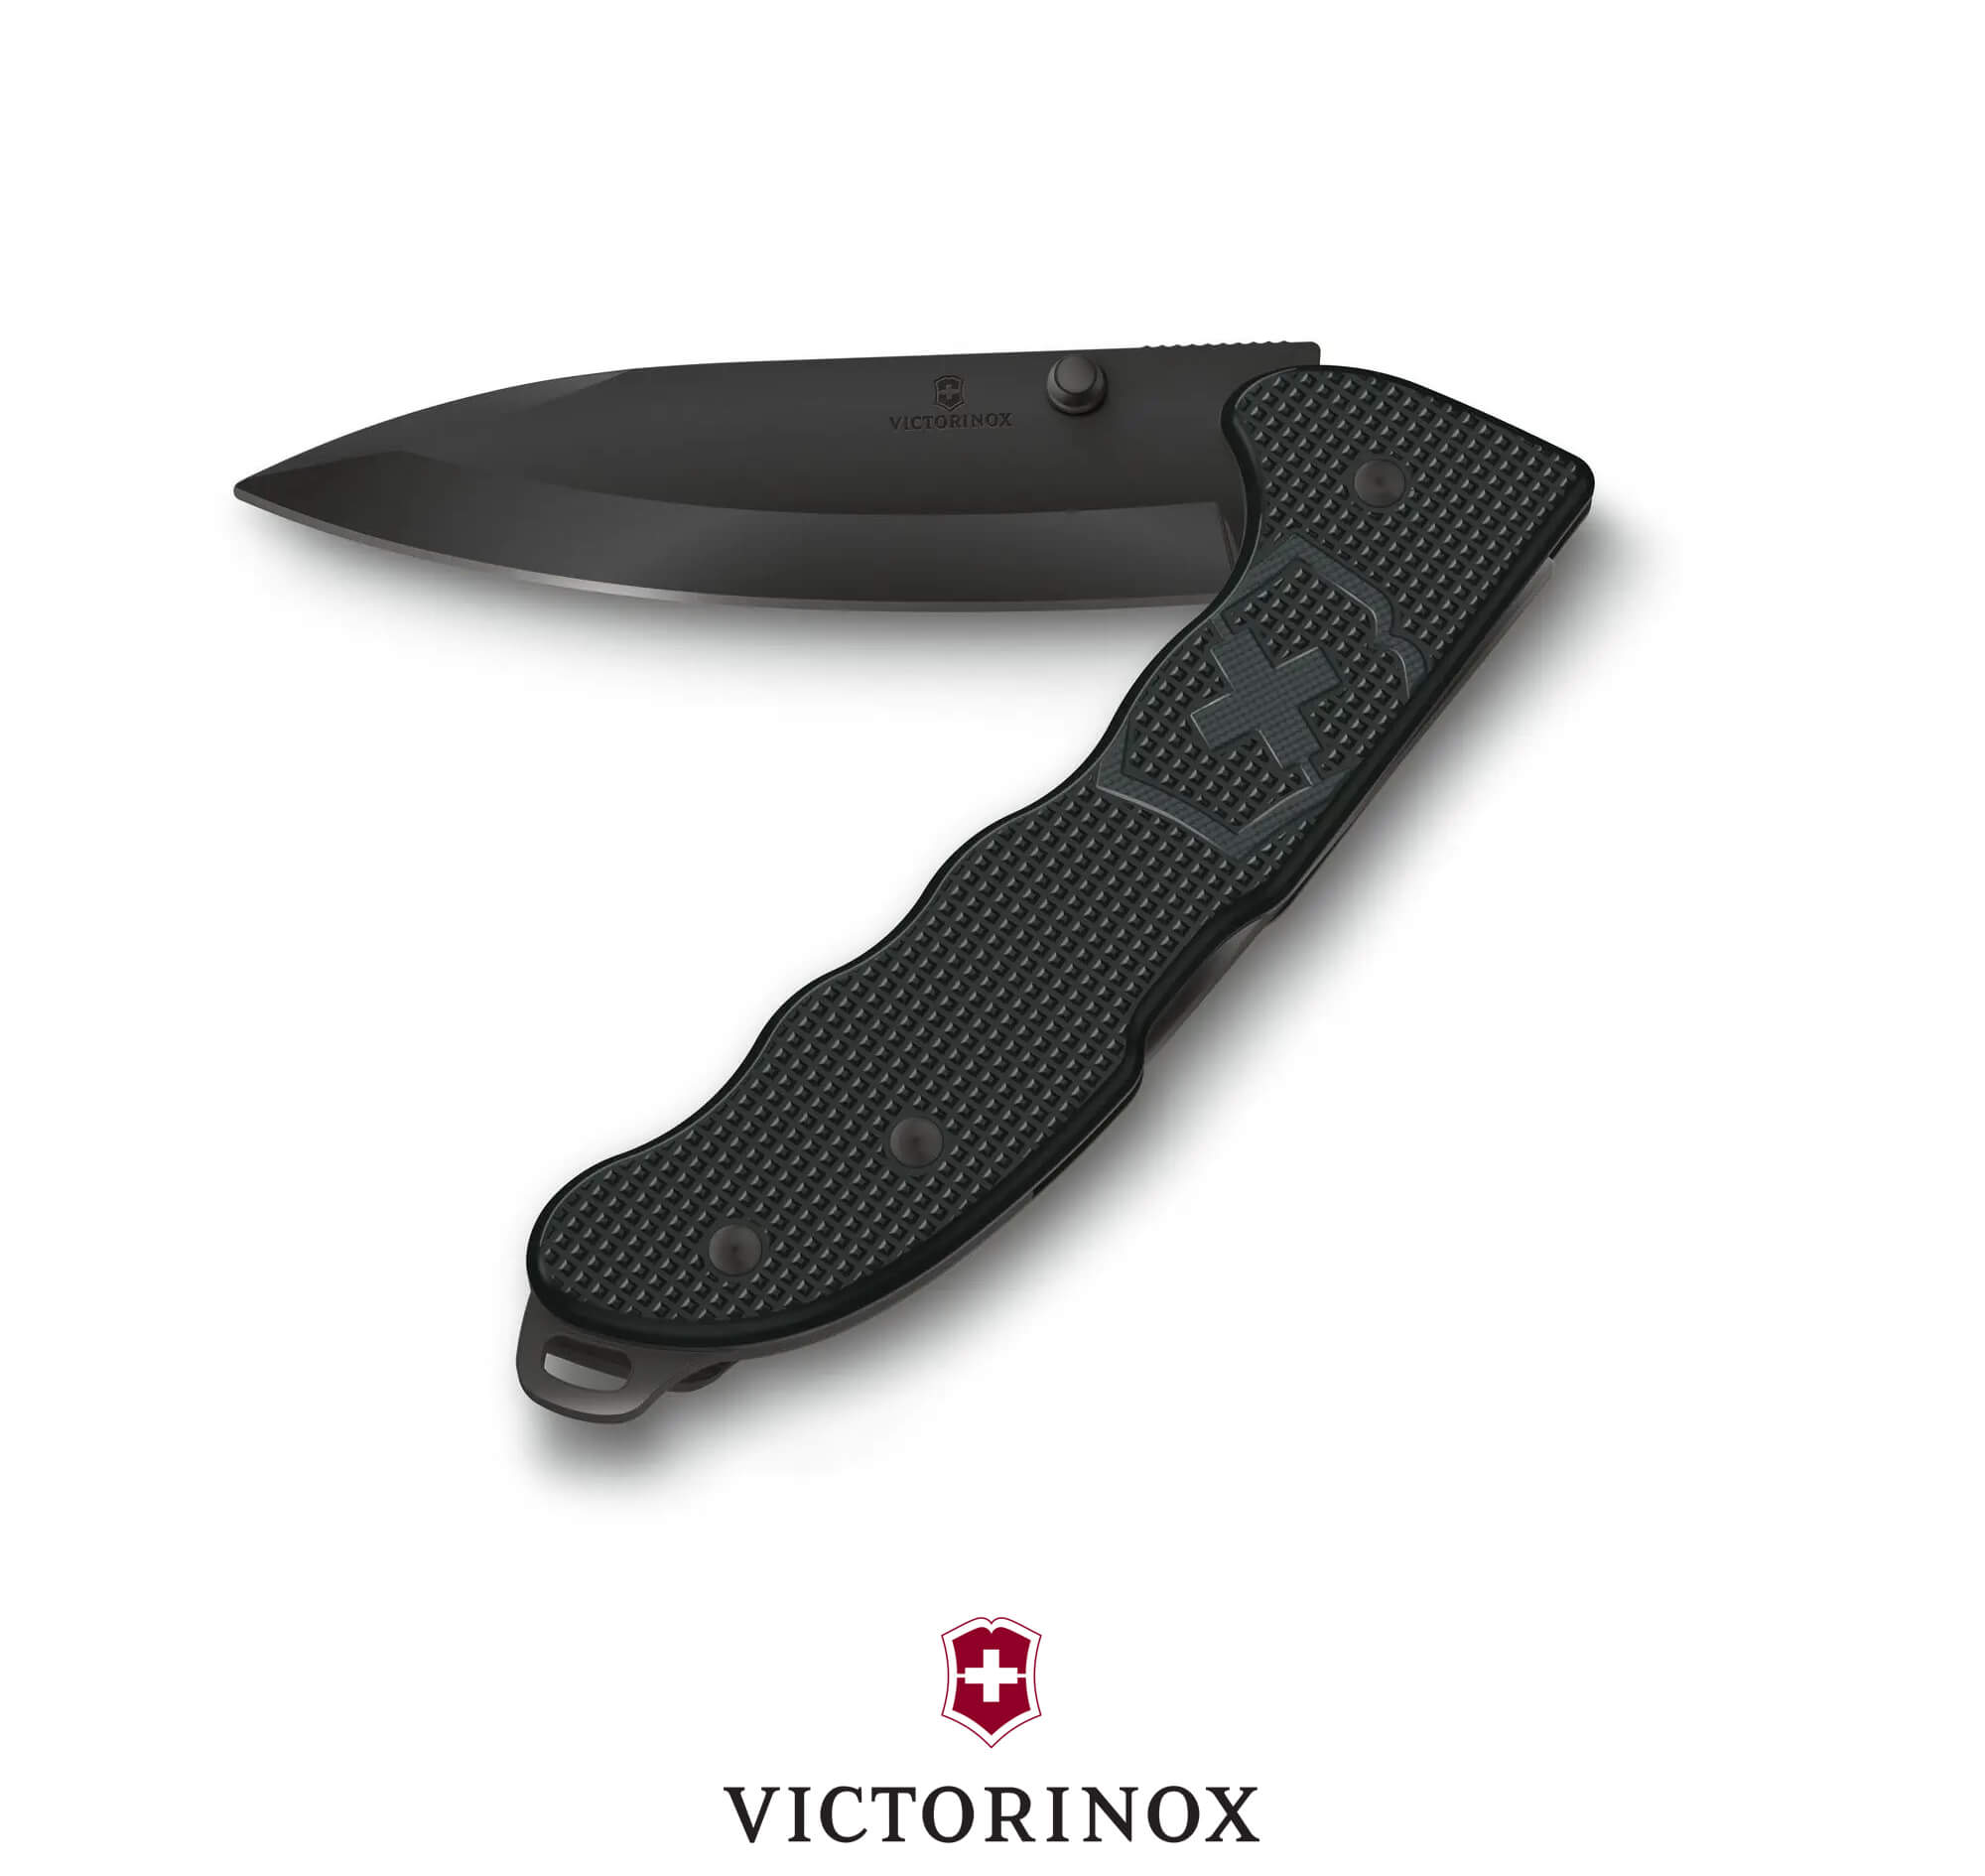 Vendita Victorinox affilatore coltelli sharpy, vendita online